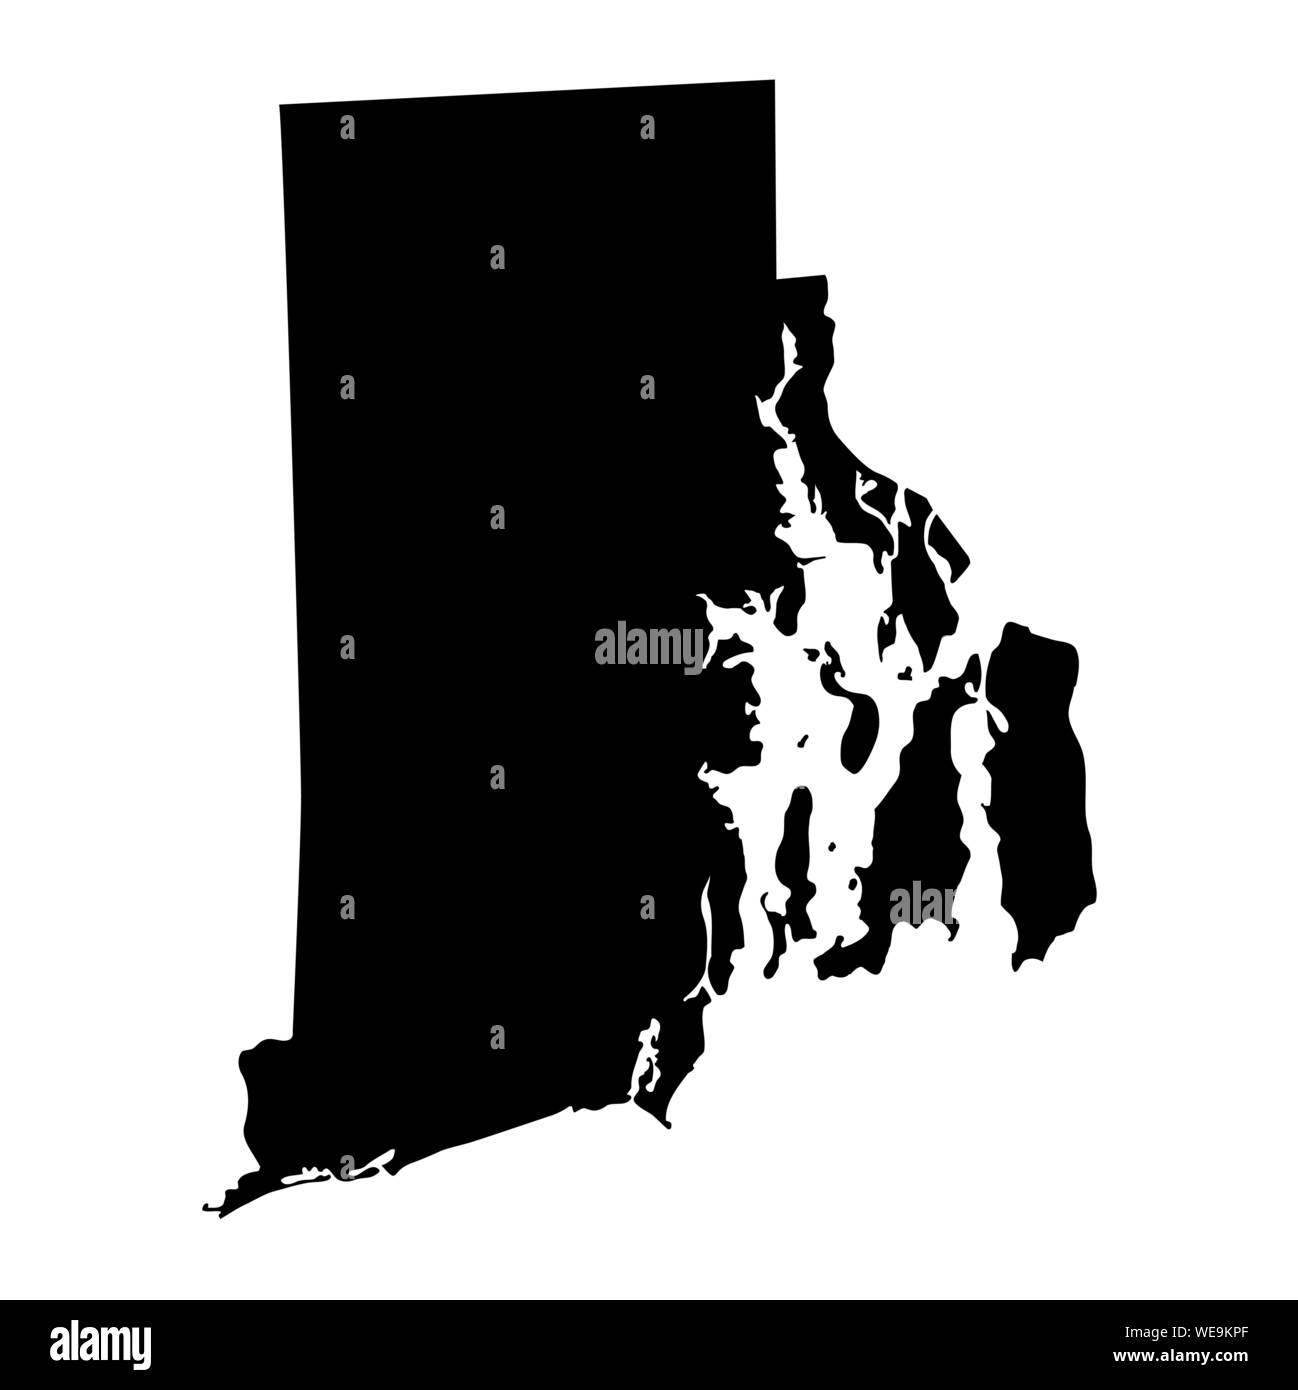 Rhode Island silhouette map Stock Vector